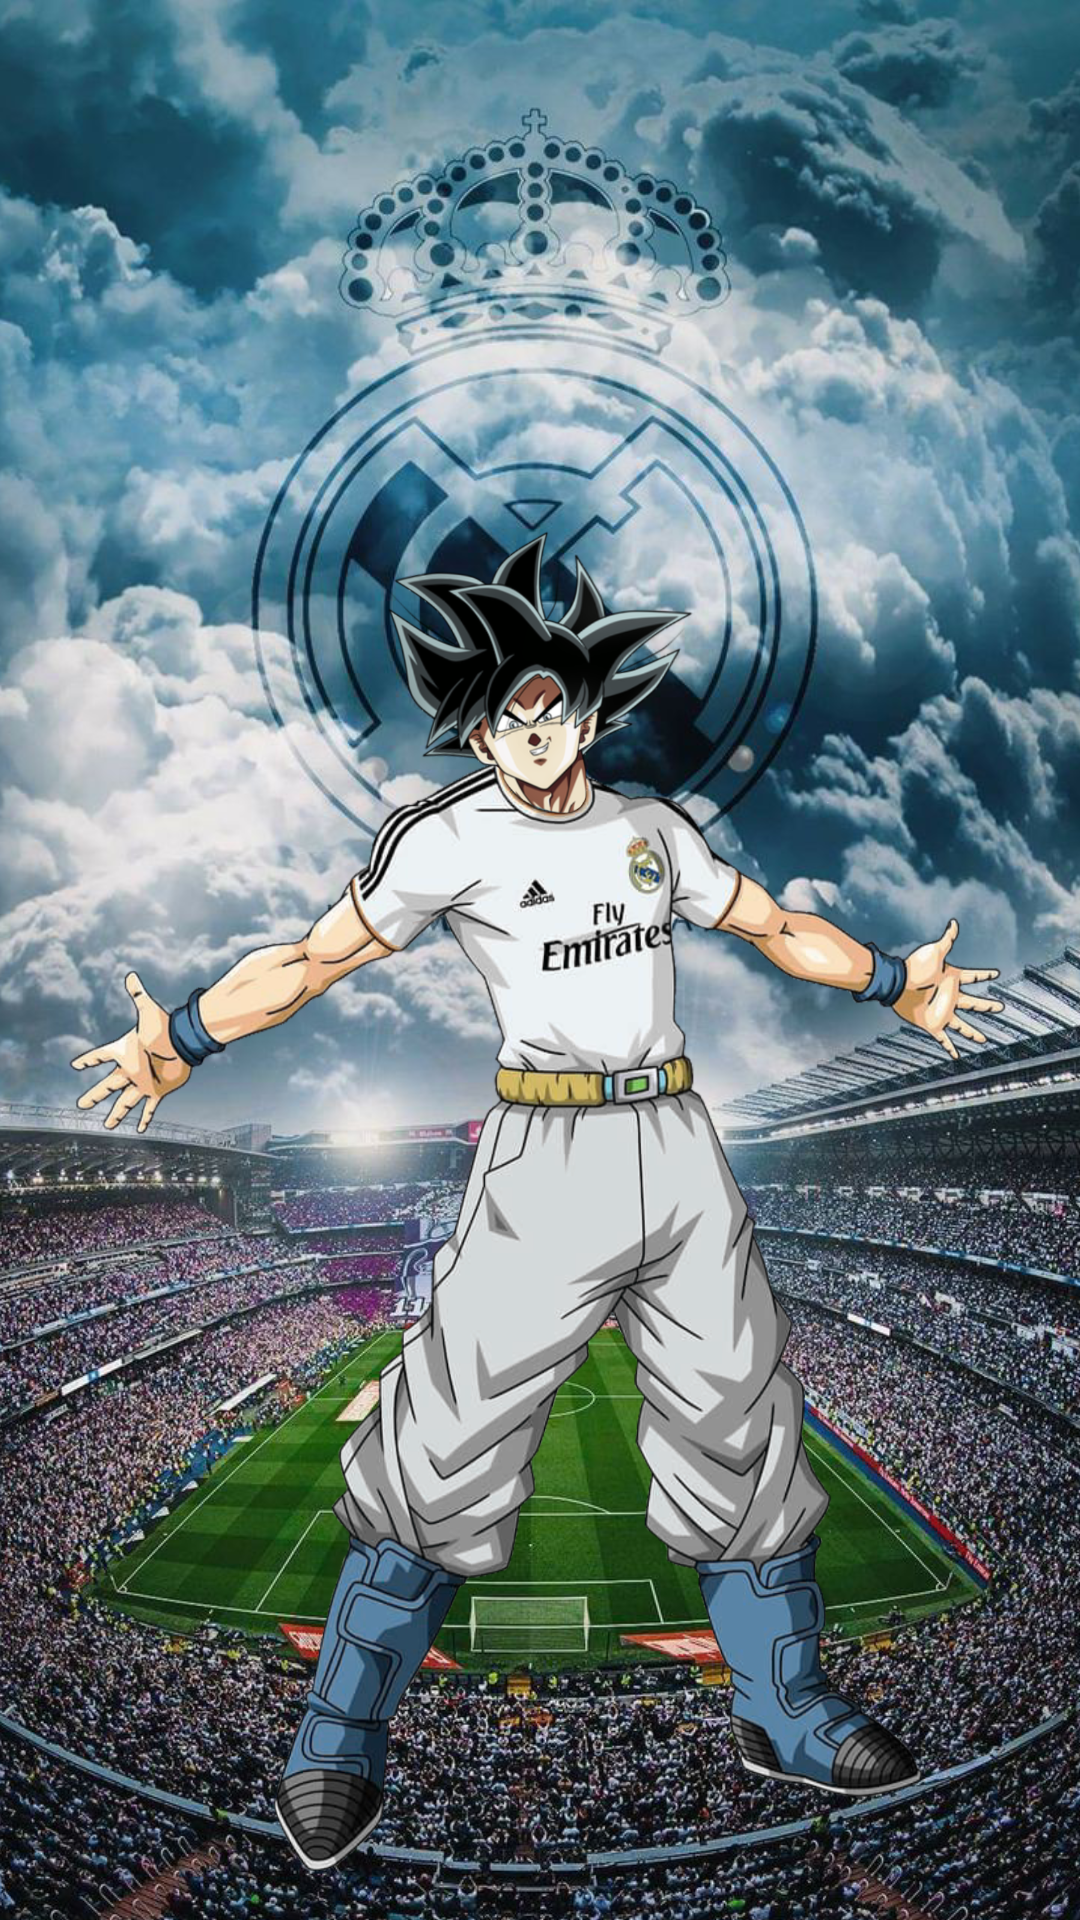 Goku joined Real Madrid by SatZBoom on DeviantArt